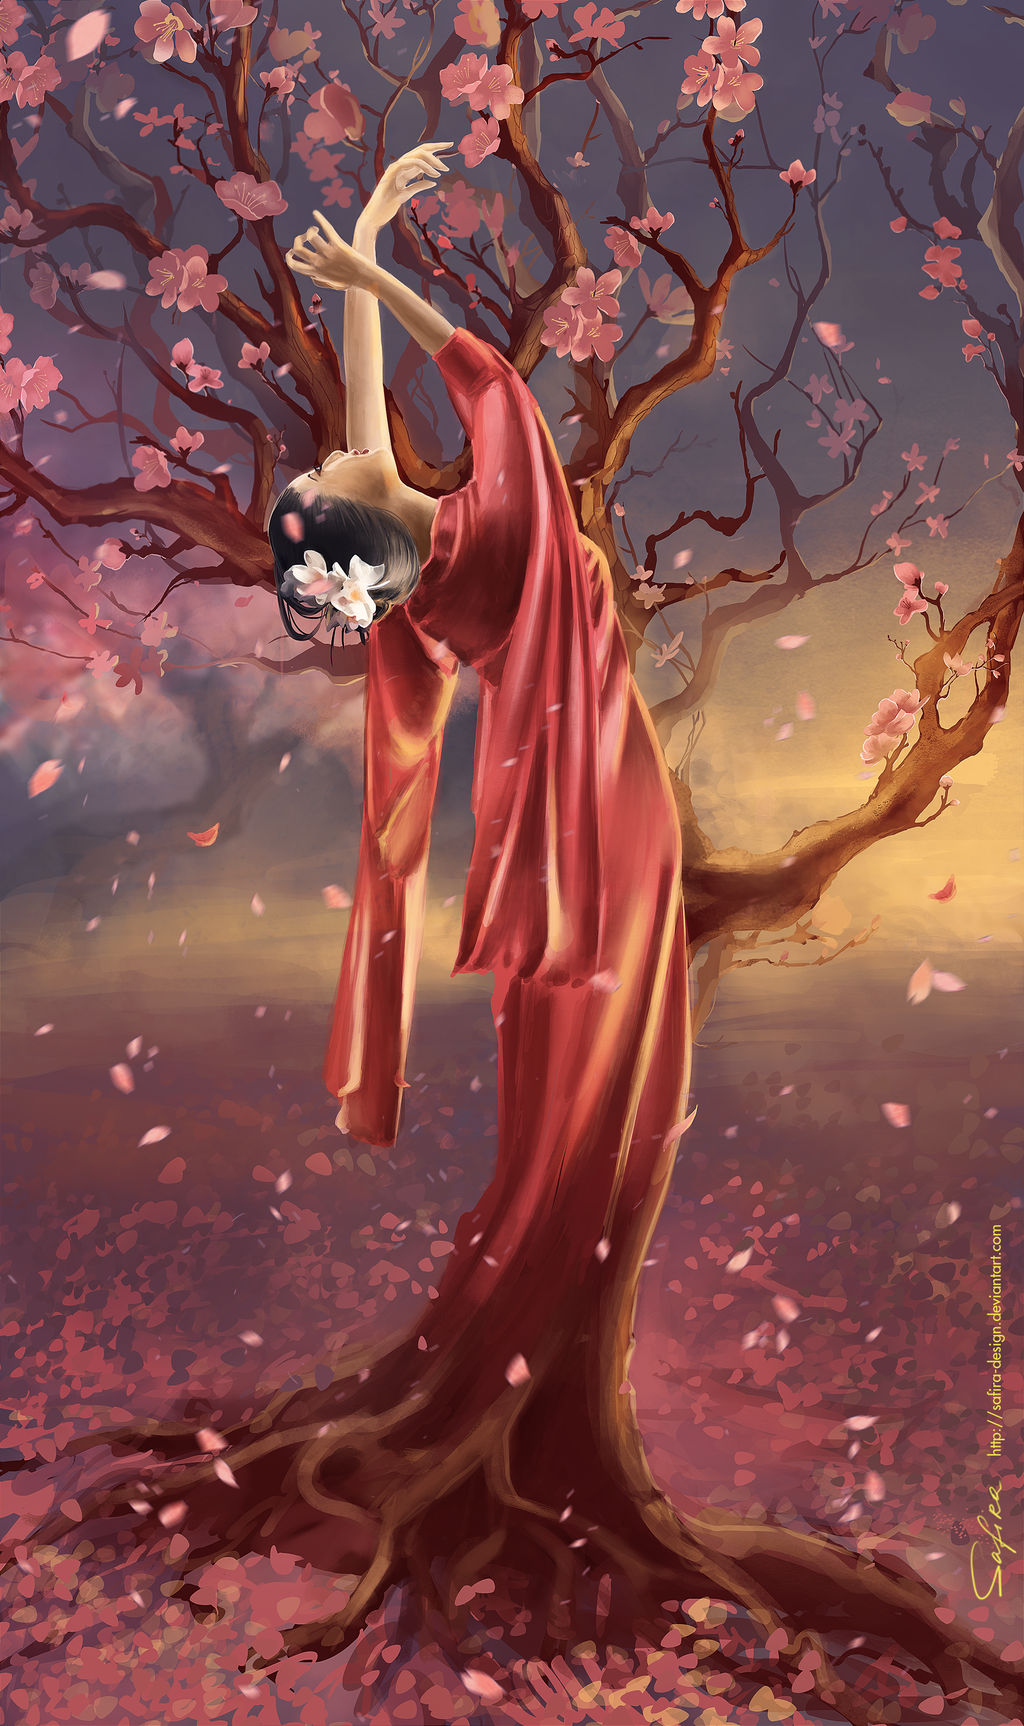 The spirit of the sakura tree